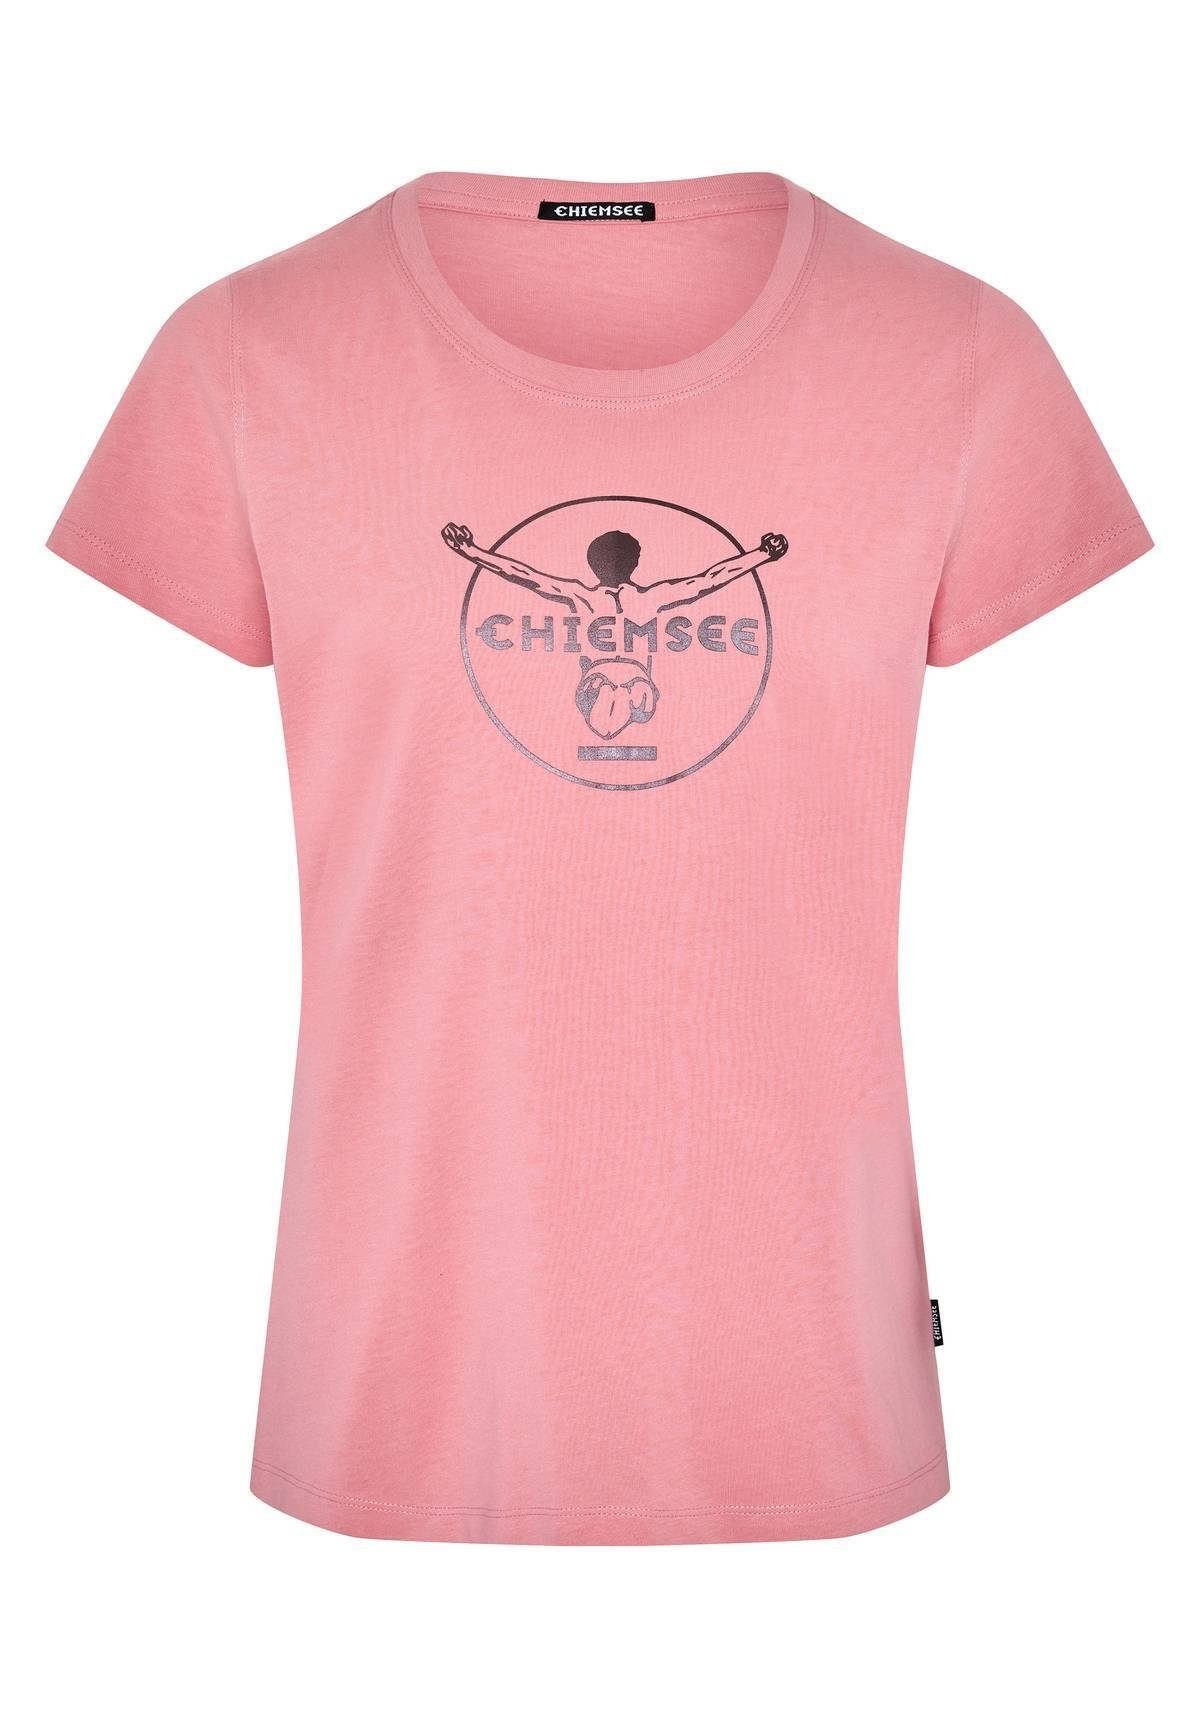 Chiemsee T-Shirt Damen T-Shirt - Taormina, Shirt, Baumwolle Rosa